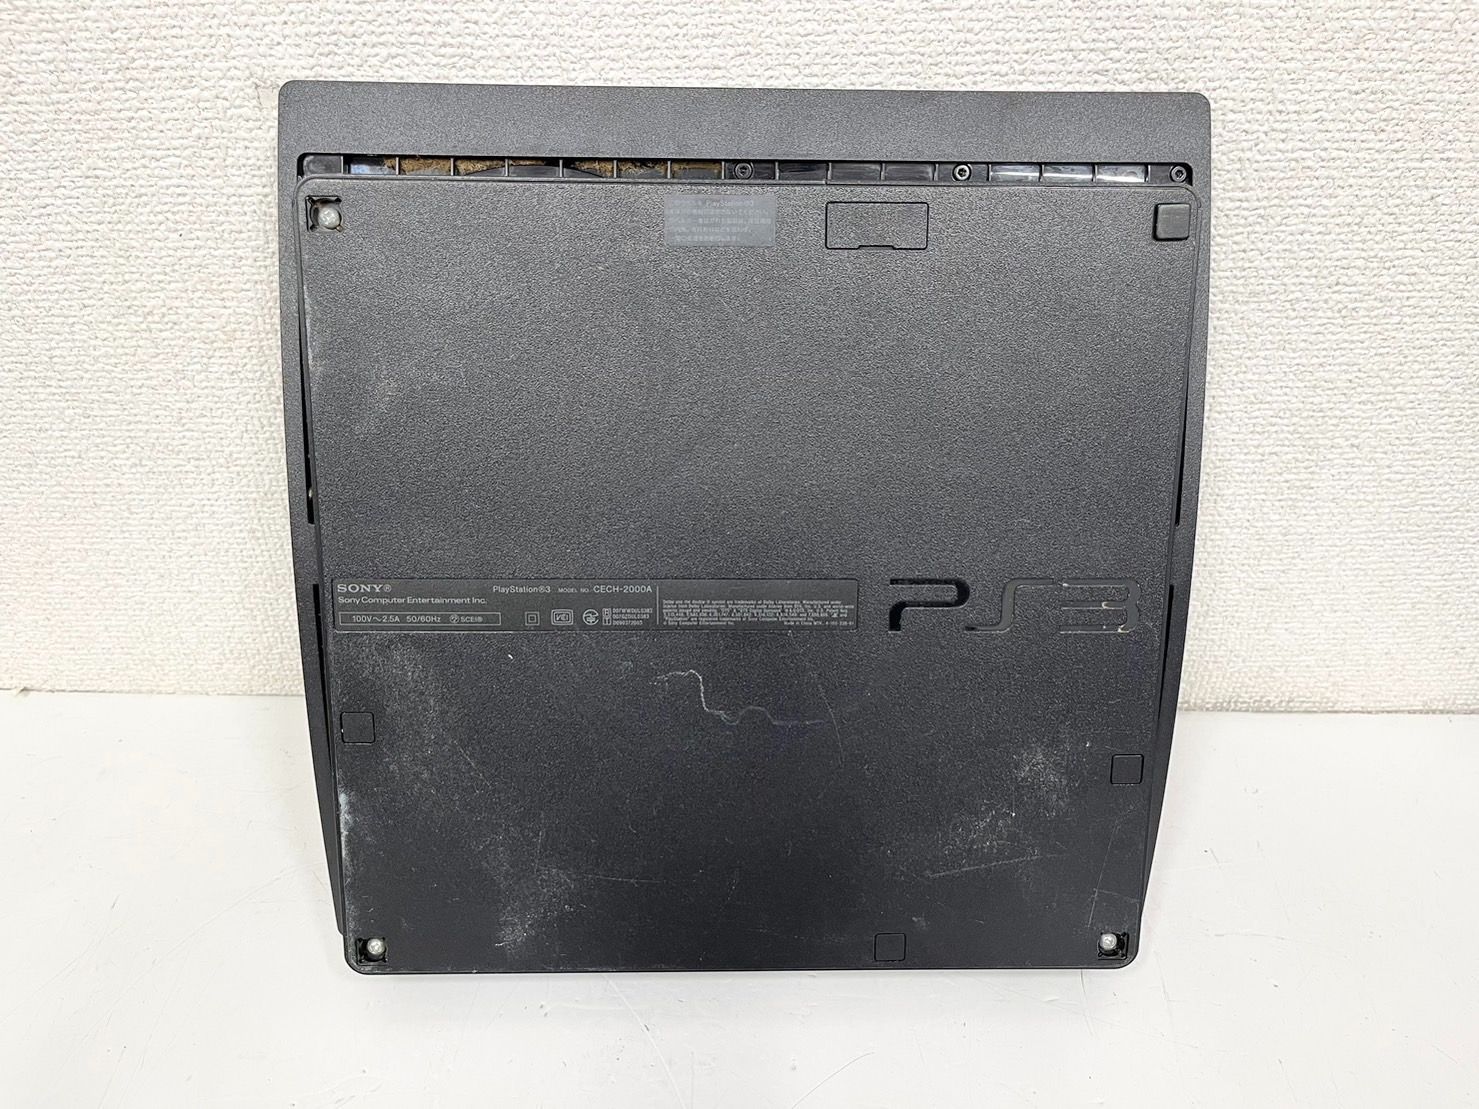 H261 SONY Playstation3 CECH-2000A ブラック 本体のみ ジャンク品 